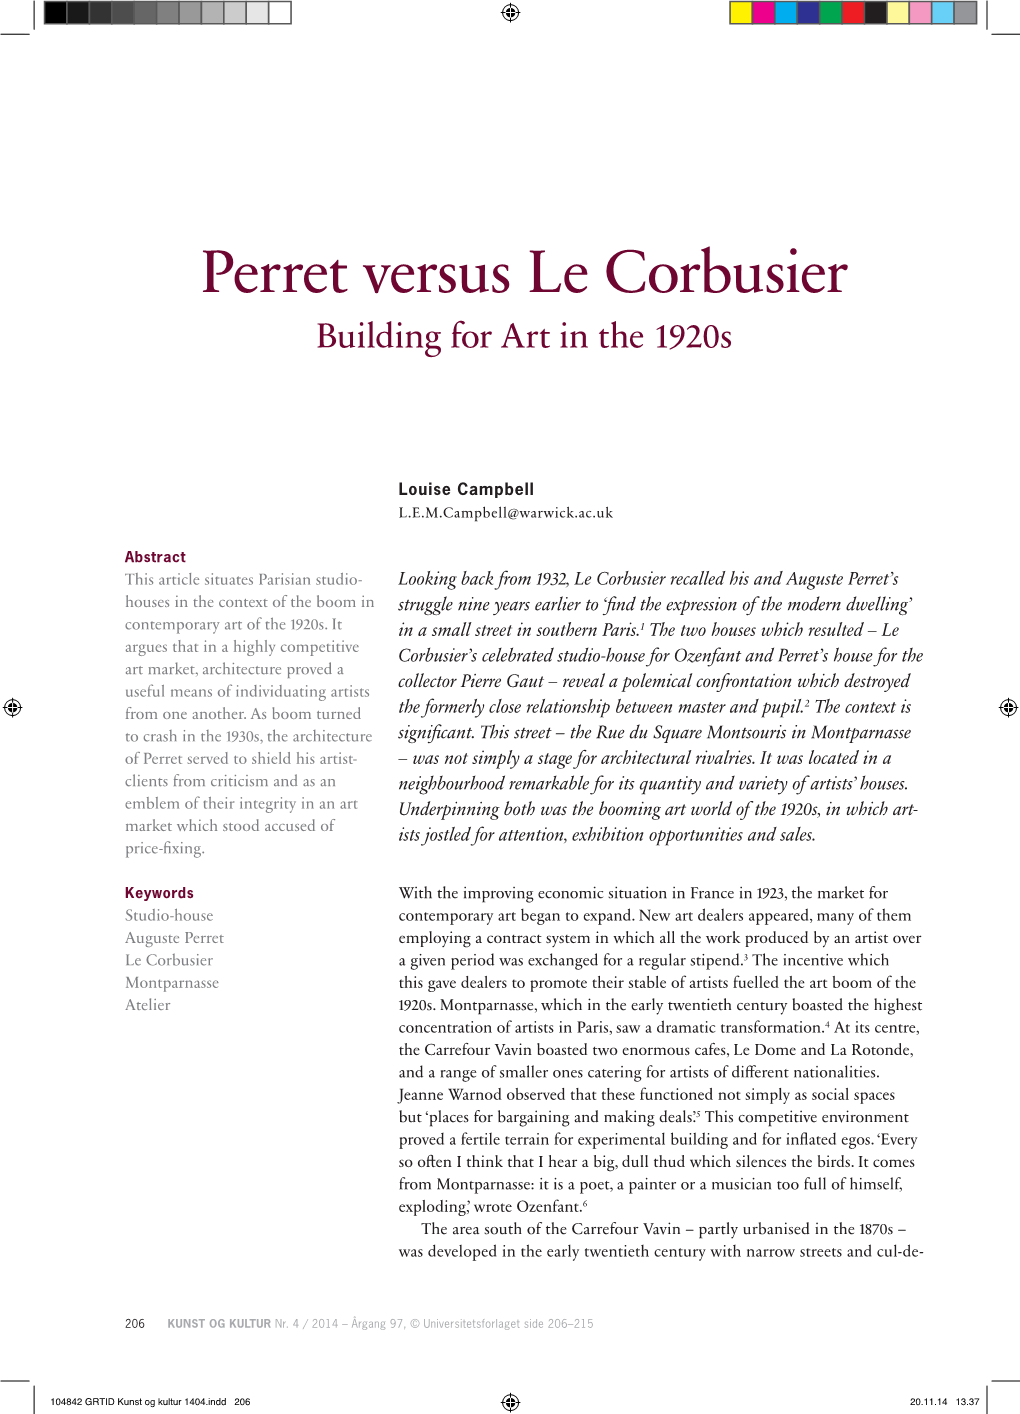 Perret Versus Le Corbusier Building for Art in the 1920S